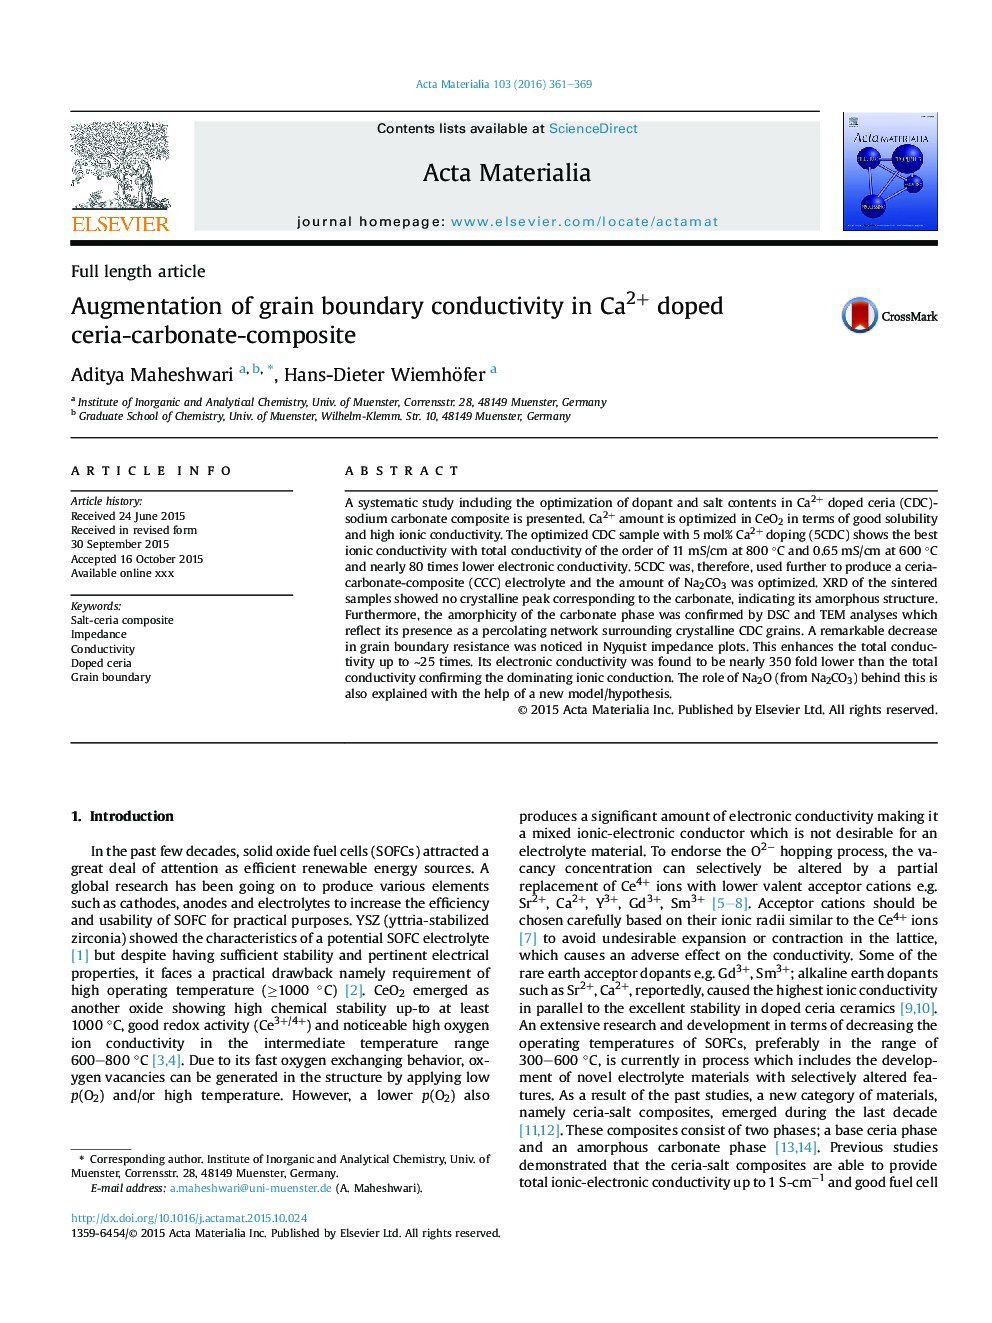 Augmentation of grain boundary conductivity in Ca2+ doped ceria-carbonate-composite